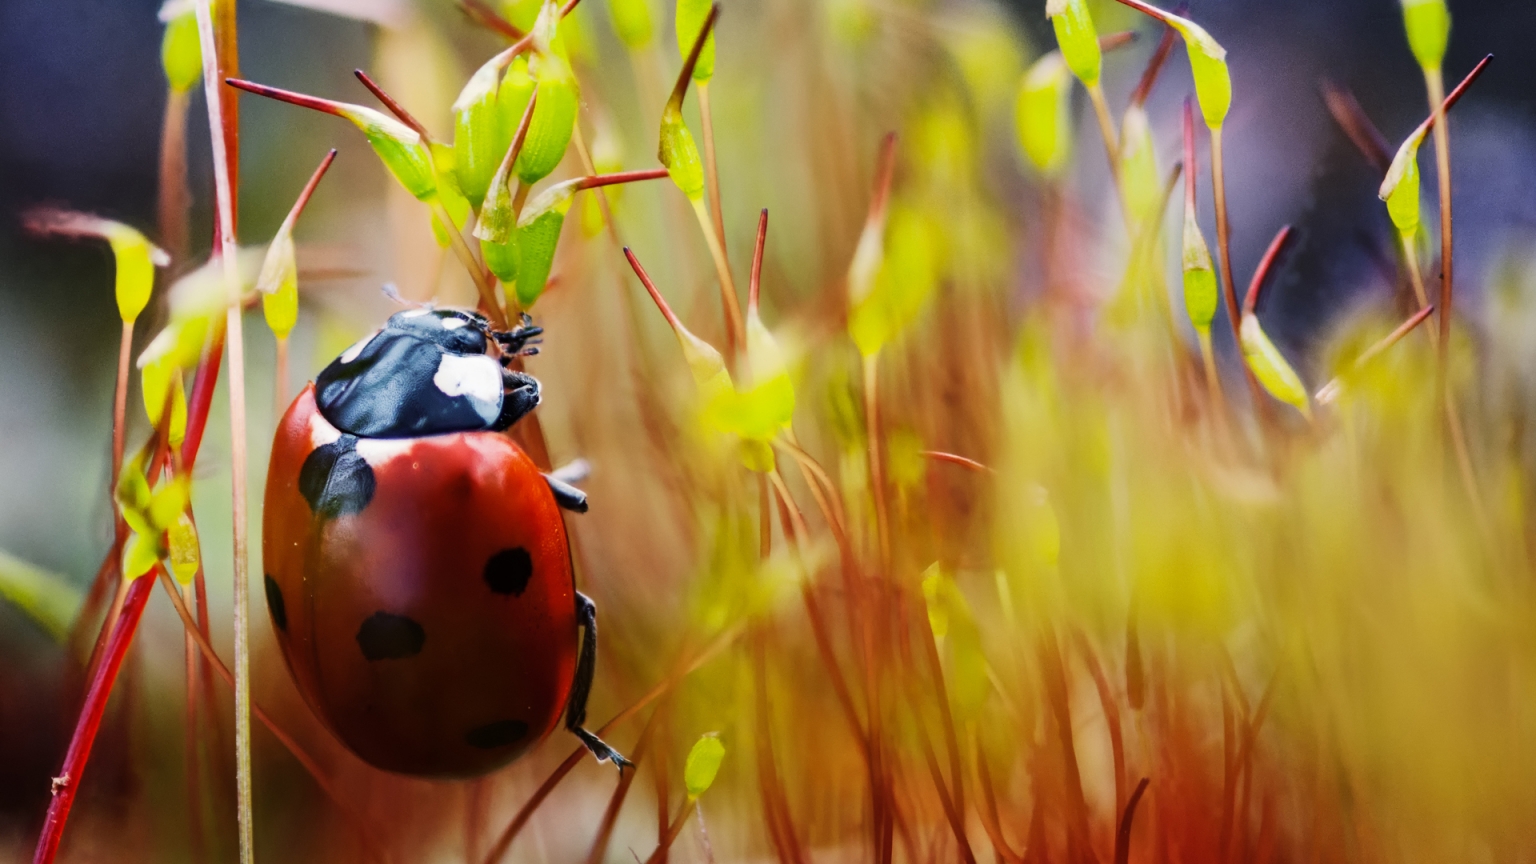 Red Ladybug Macro Photo for 1536 x 864 HDTV resolution